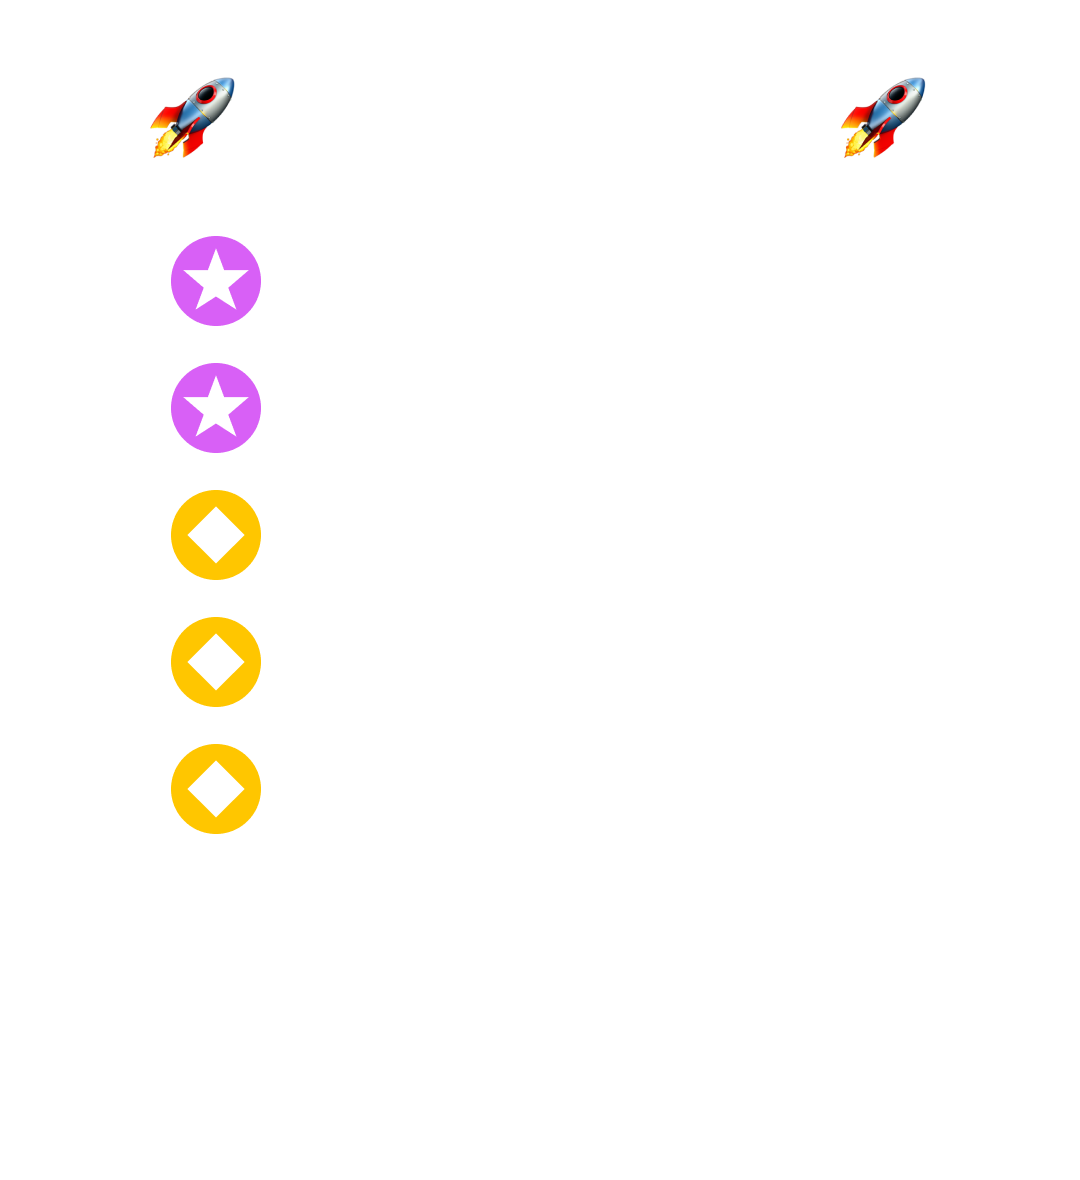 RocketGIRL My Rockets image: 1